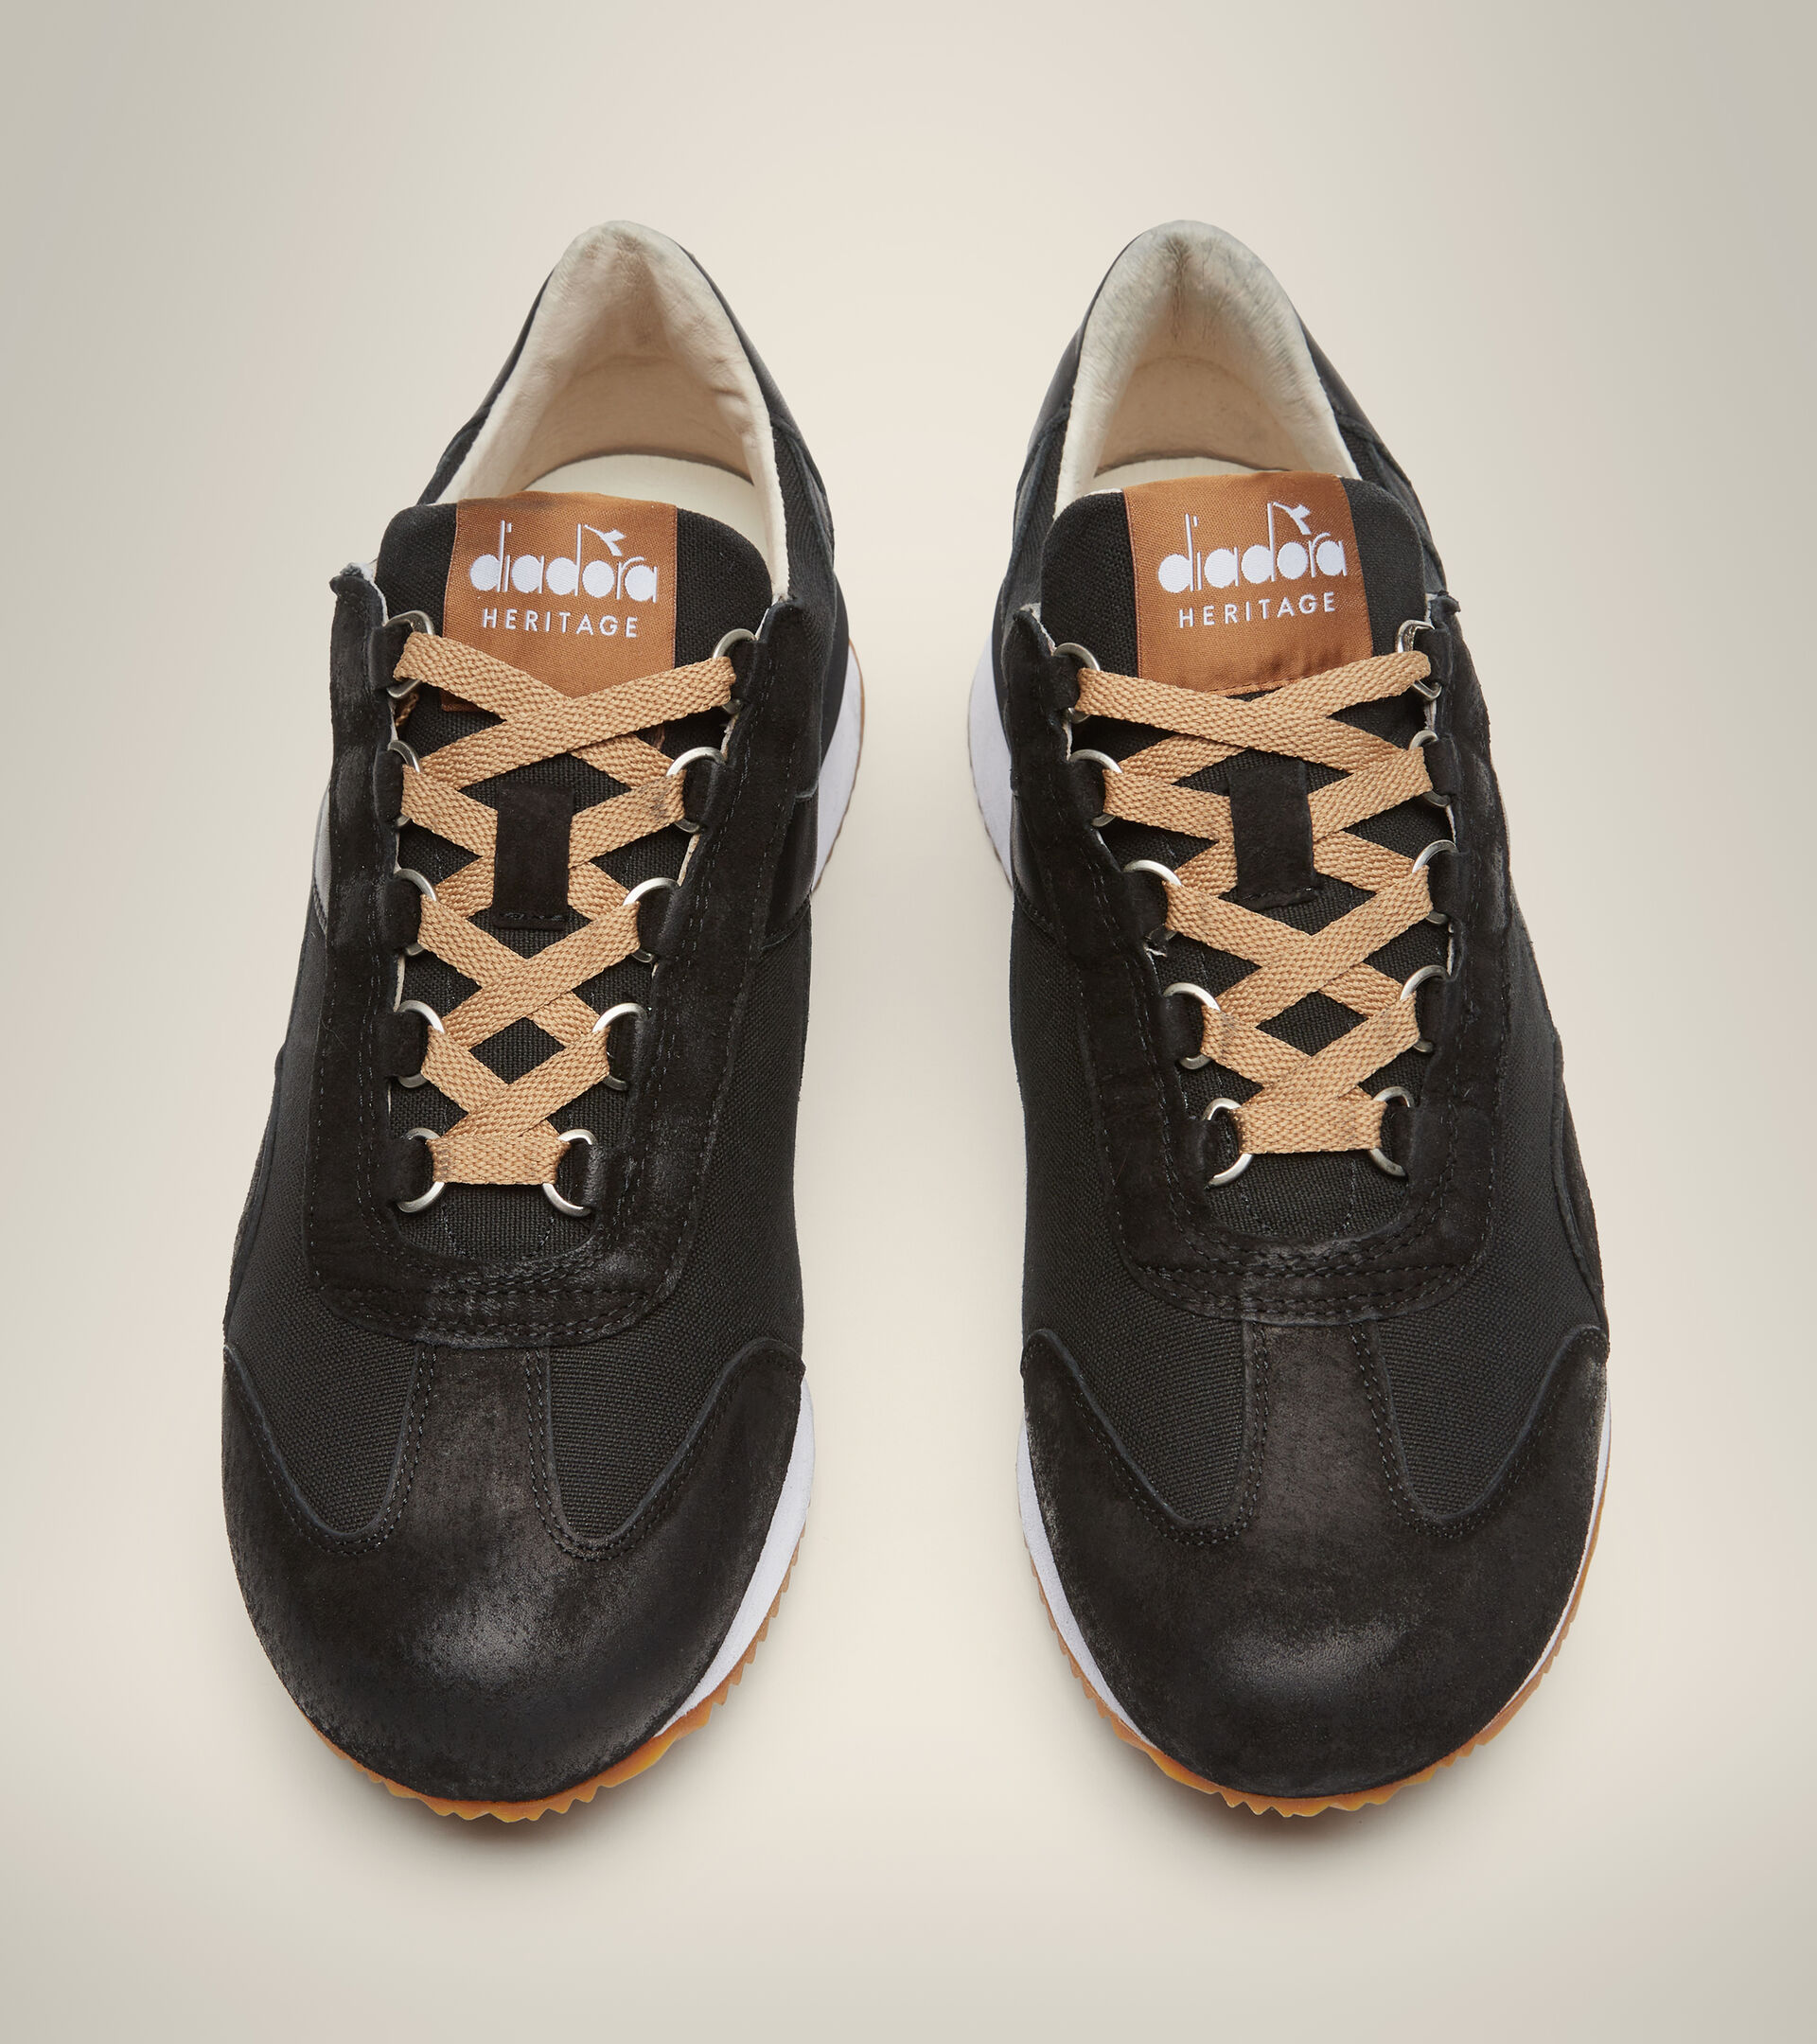 Chaussures Heritage - Unisexe EQUIPE MAD NOIR/NOIR - Diadora